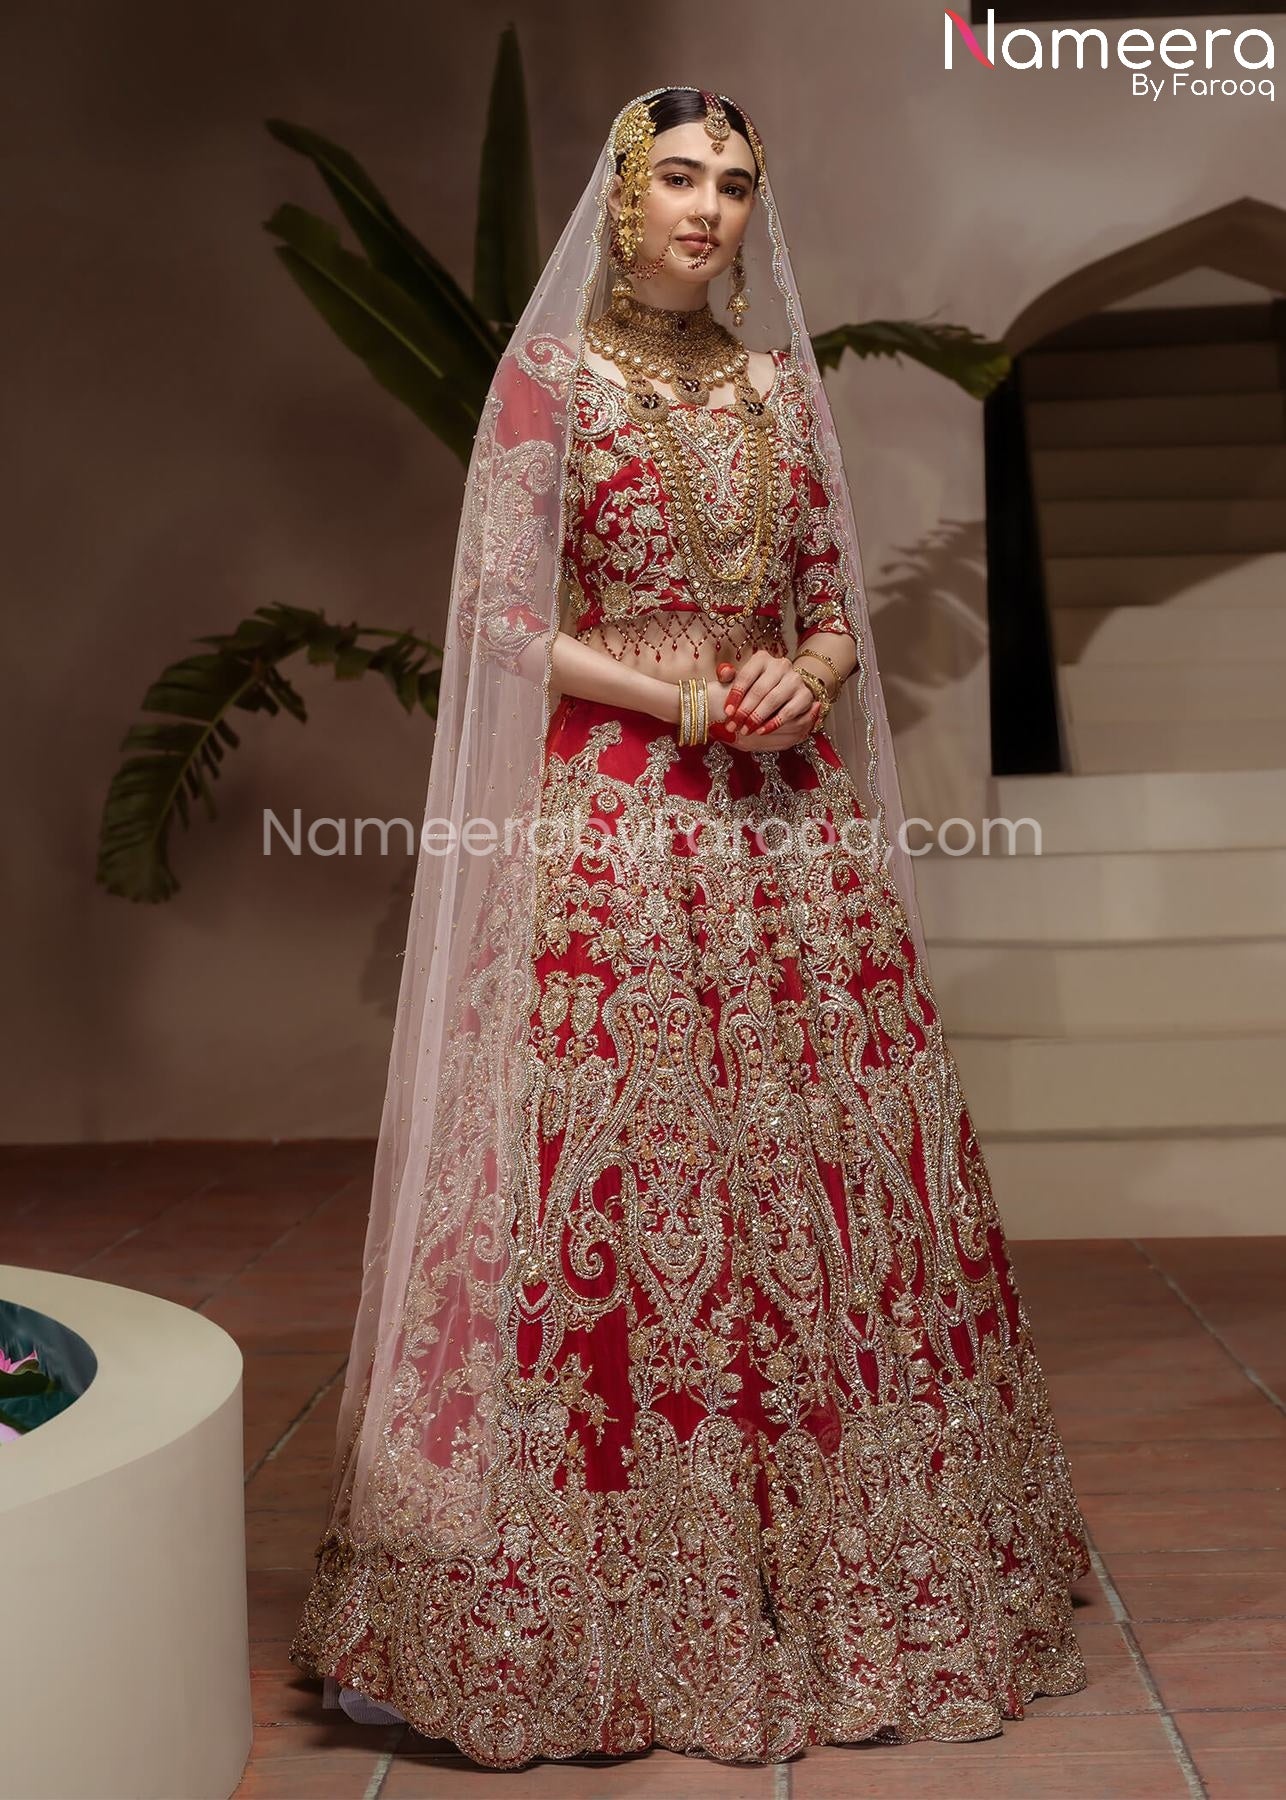 Amritsar Bride In Maroon Velvet Lehenga And Pastel Jewellery | Fashion  wedding jewelry, Indian bride poses, Bride